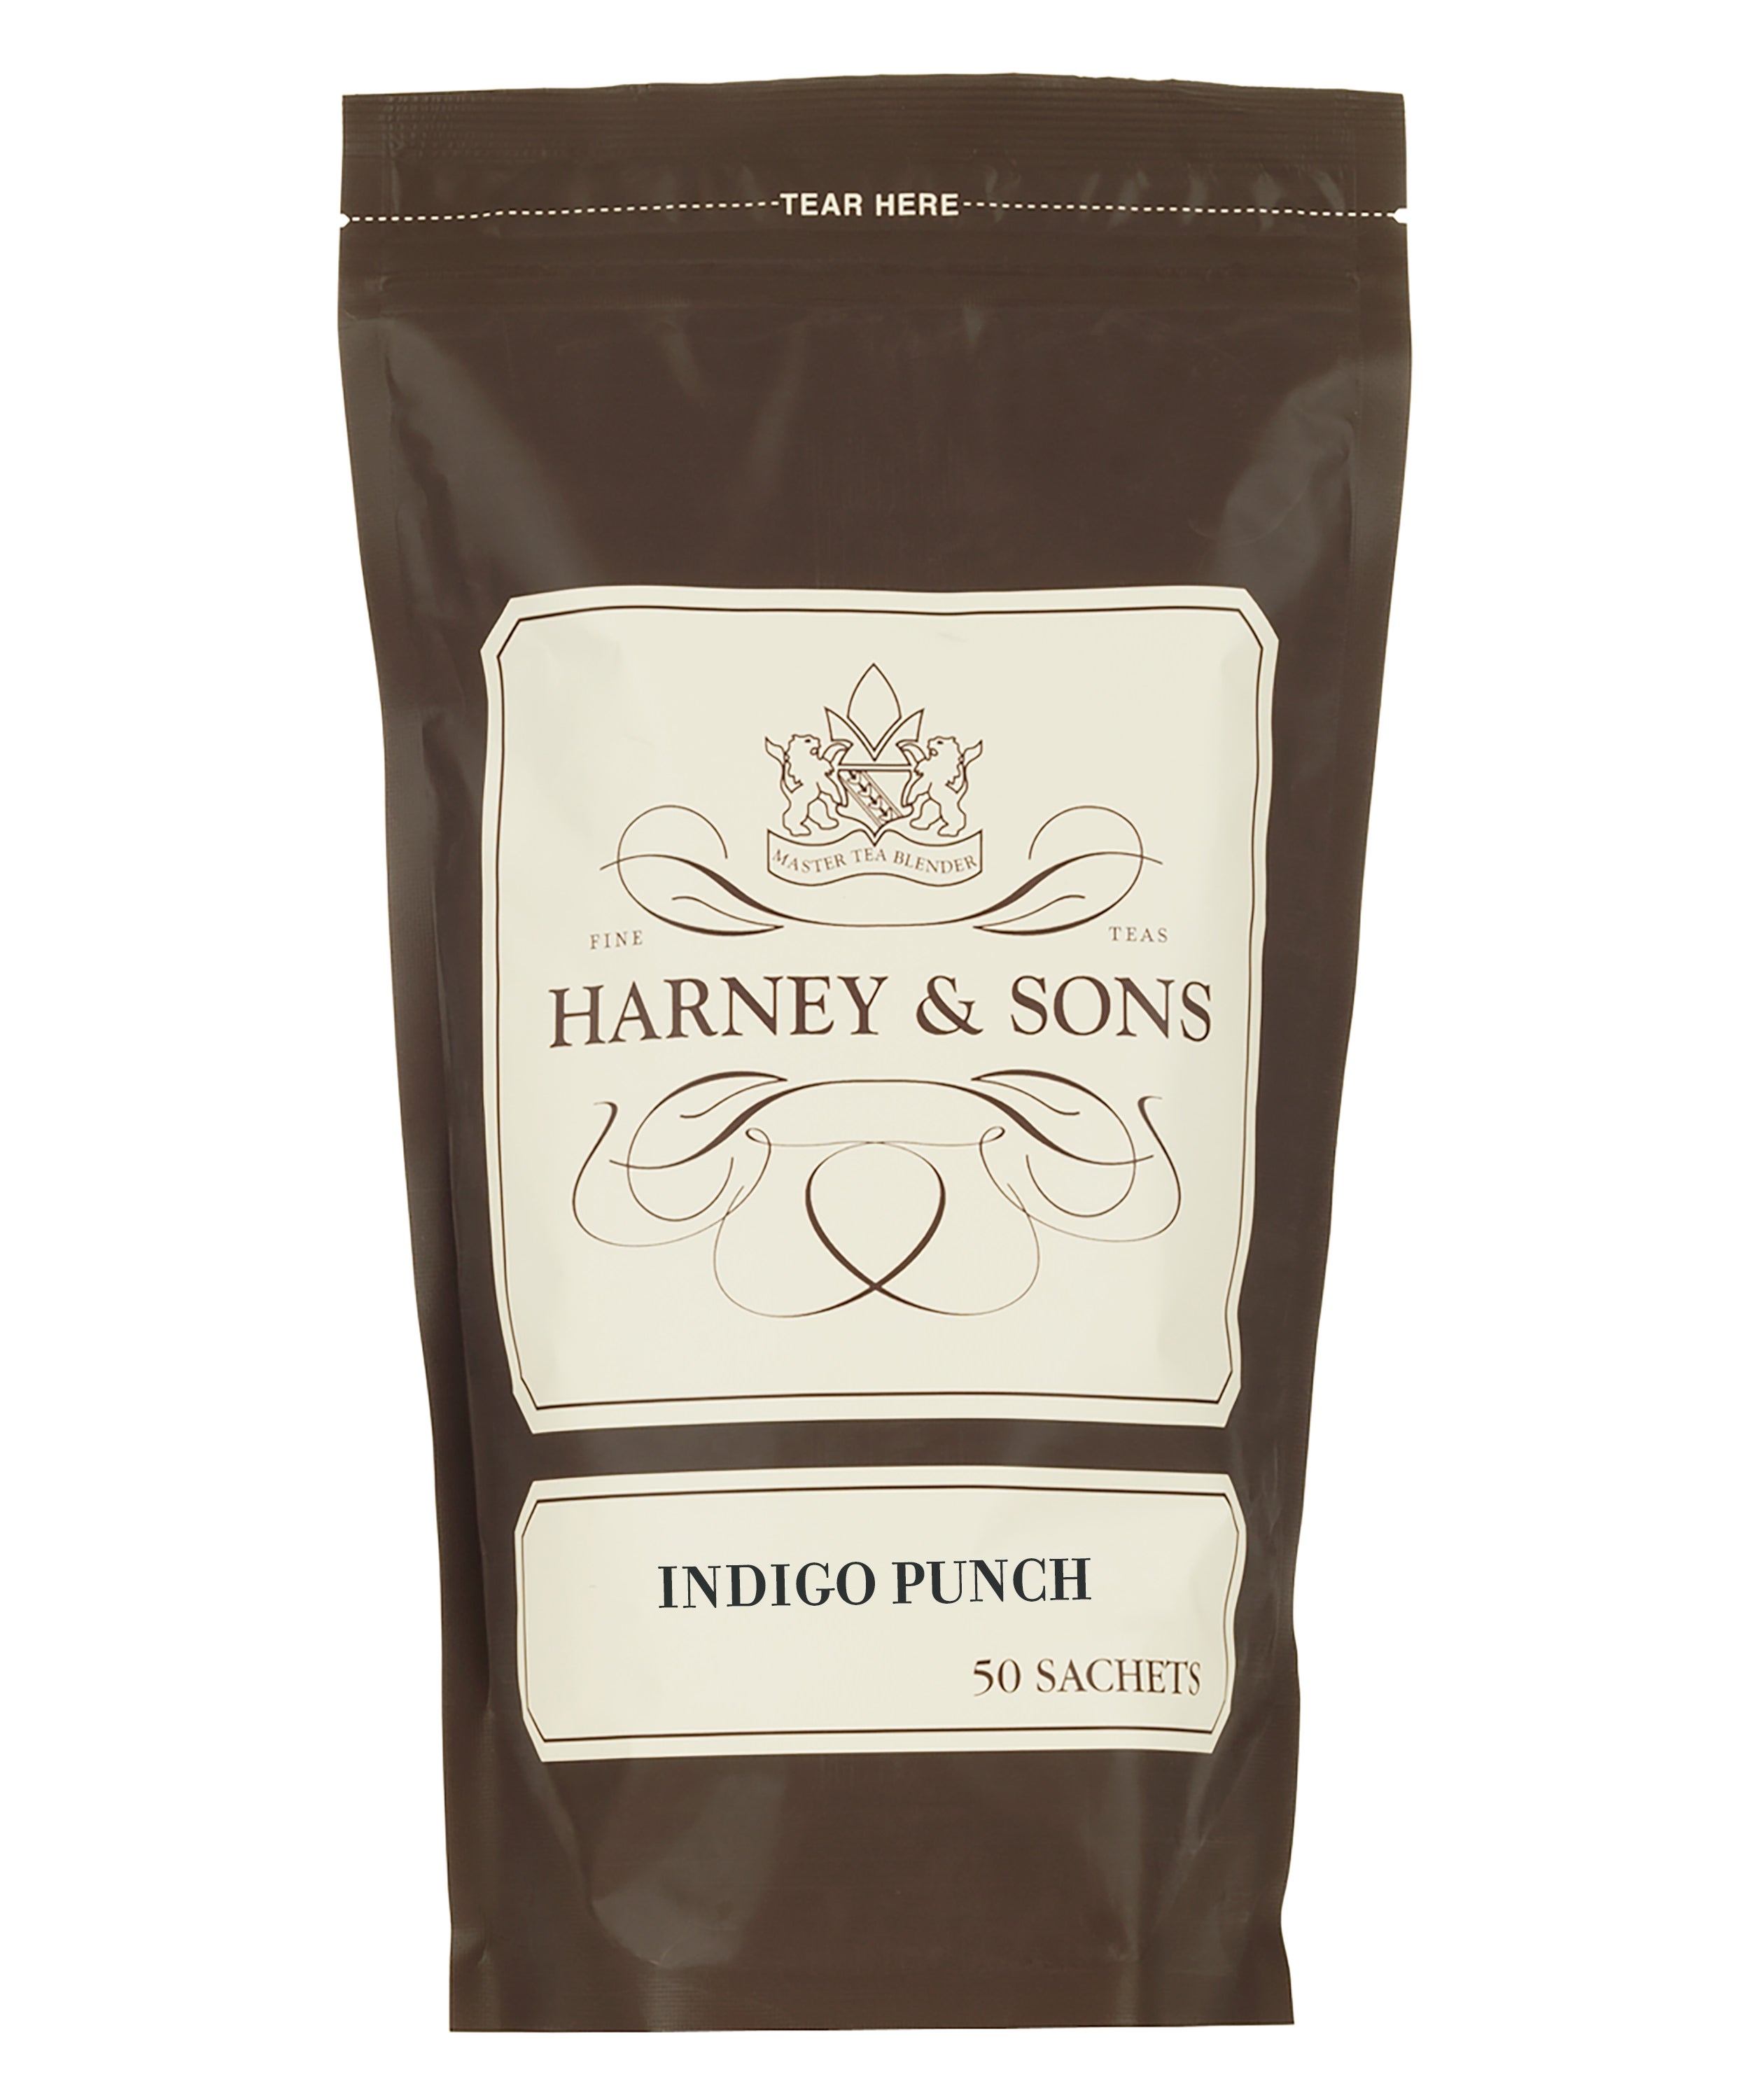 Indigo Punch - Sachets Bag of 50 sachets - Harney & Sons Fine Teas